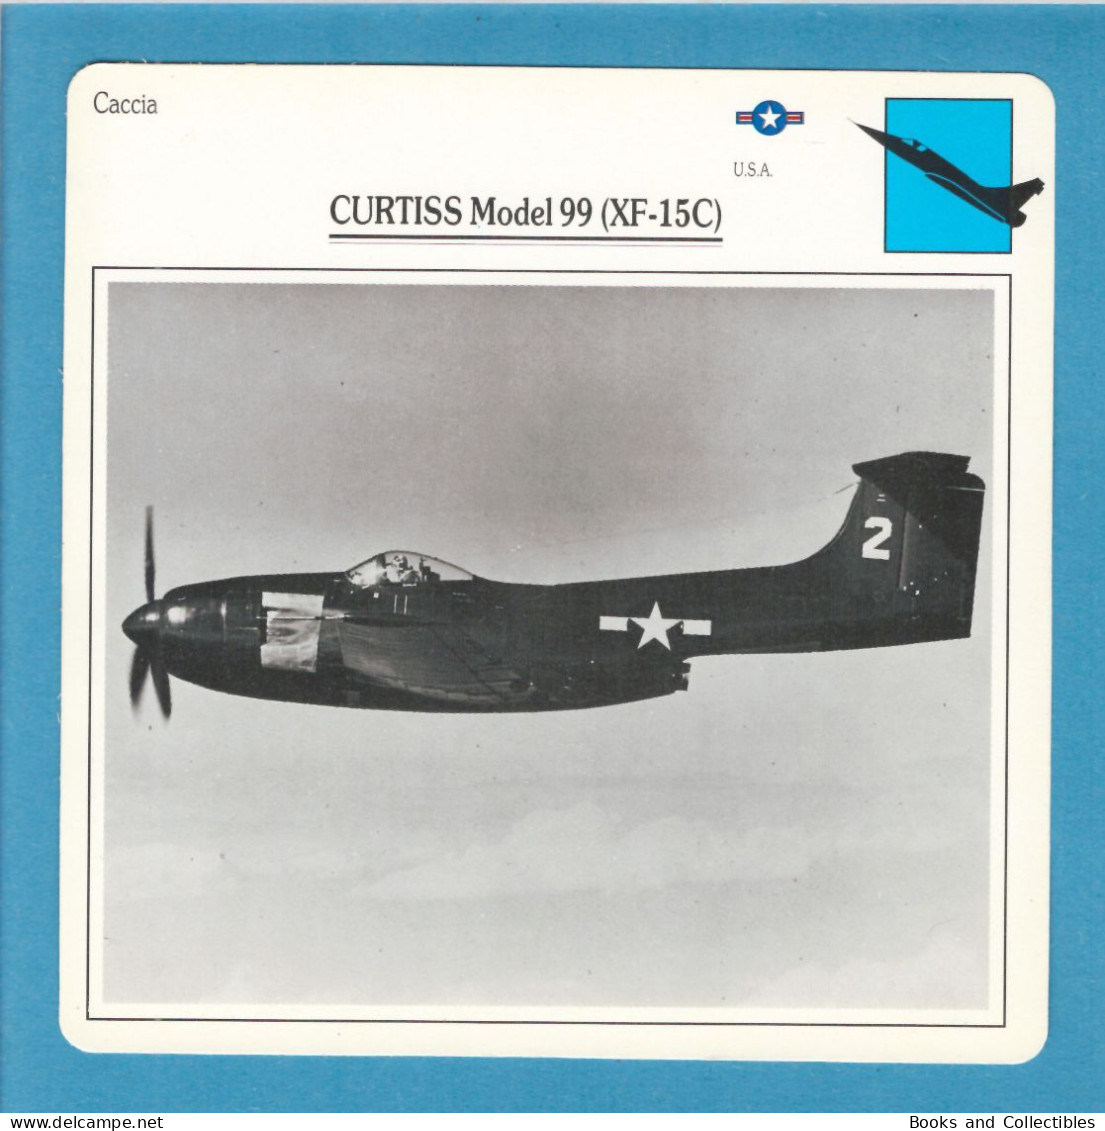 DeAgostini Educational Sheet "Warplanes" / CURTISS Model 99 XF-15C (U.S.A.) - Aviation